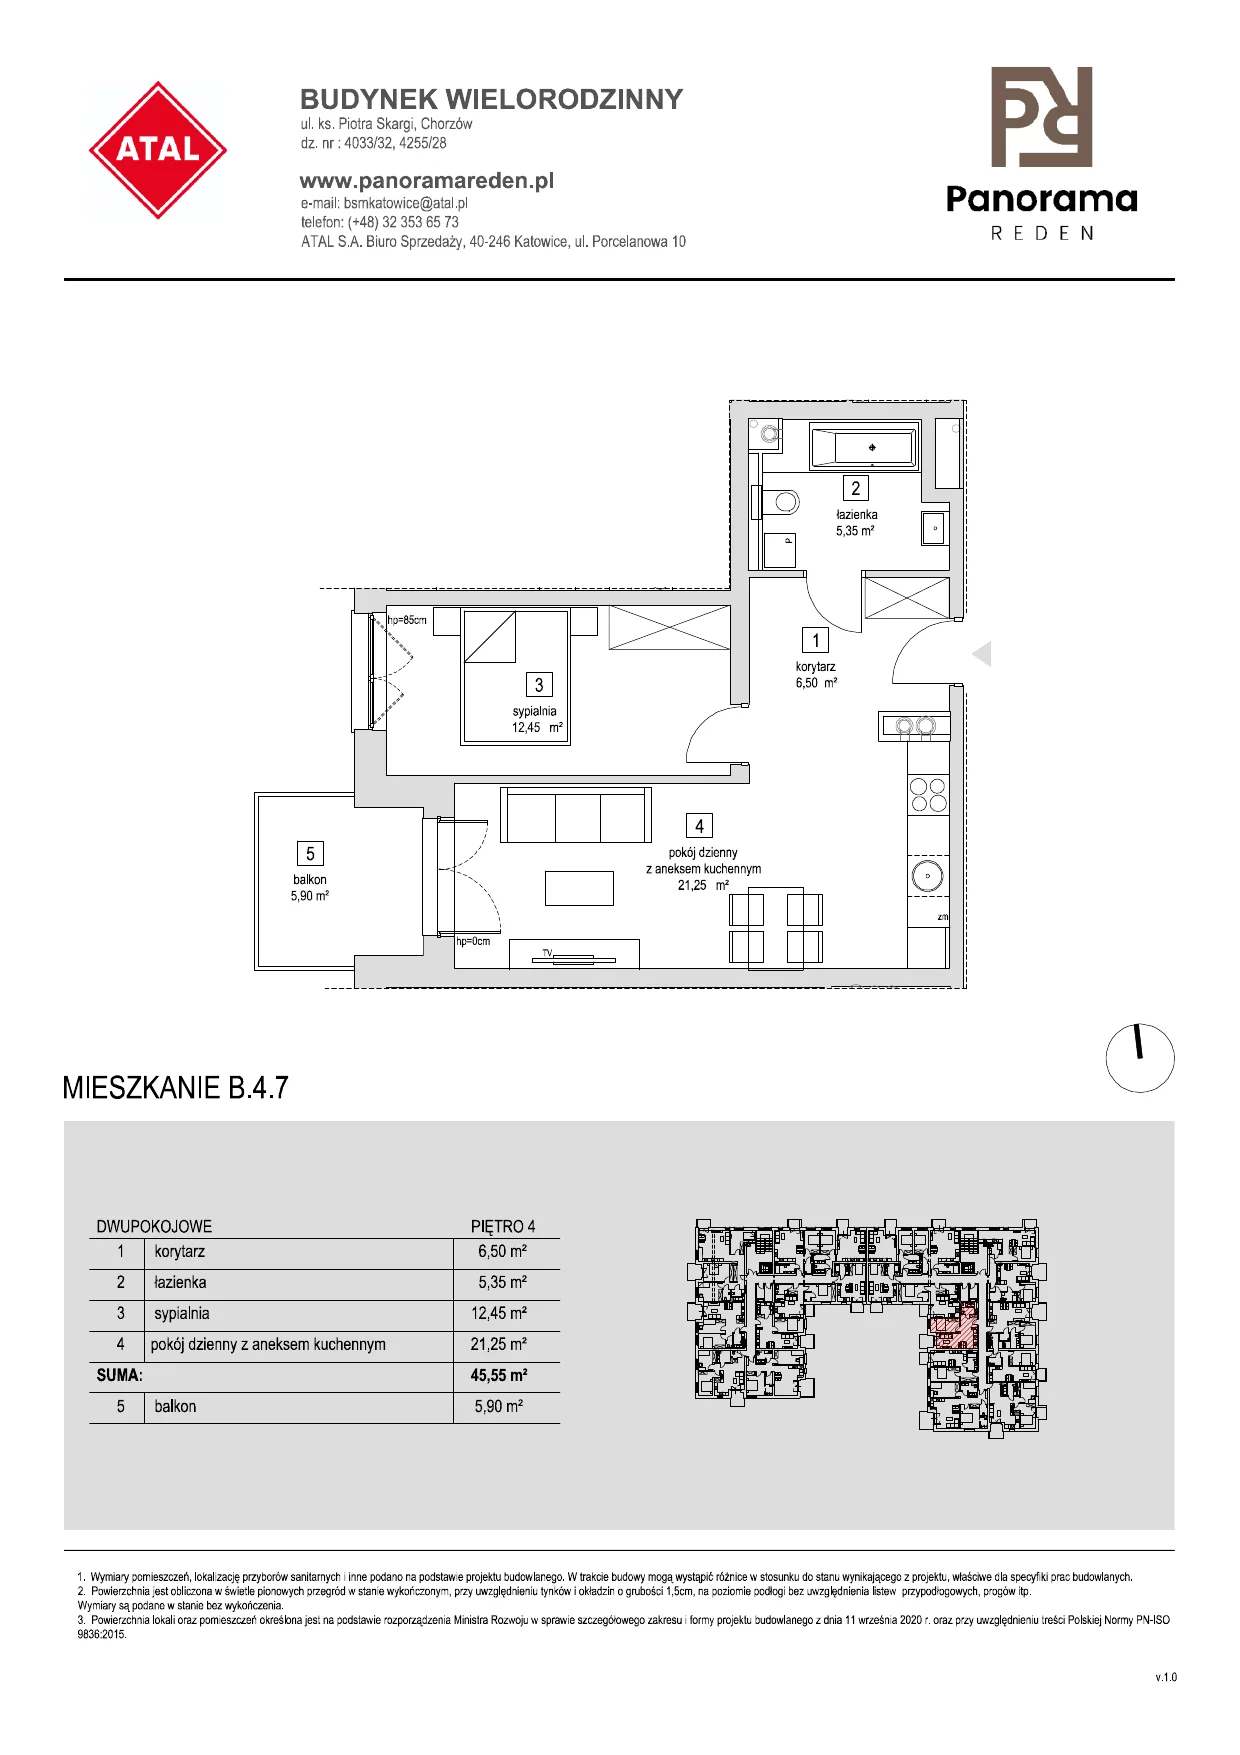 Mieszkanie 45,54 m², piętro 4, oferta nr B-4-M07, Panorama Reden, Chorzów, Centrum, Centrum, ul. Piotra Skargi